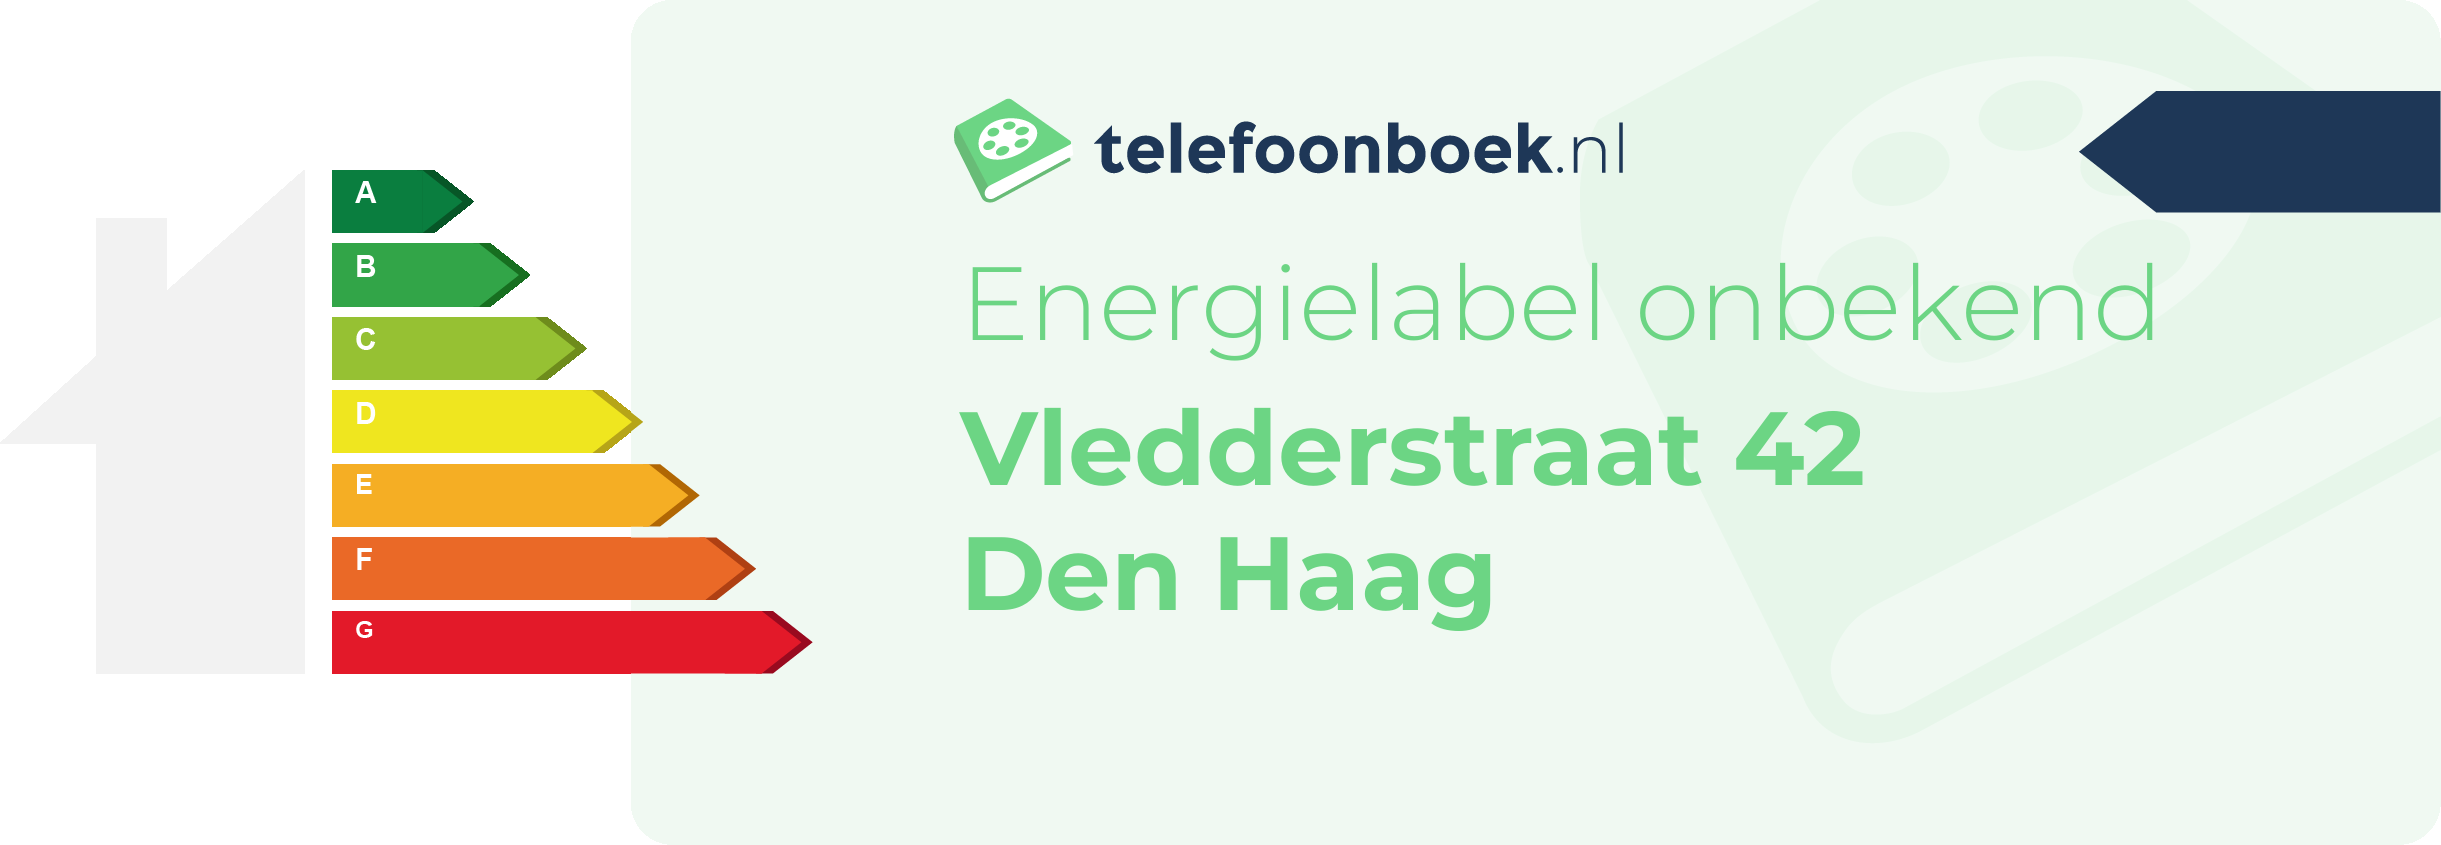 Energielabel Vledderstraat 42 Den Haag